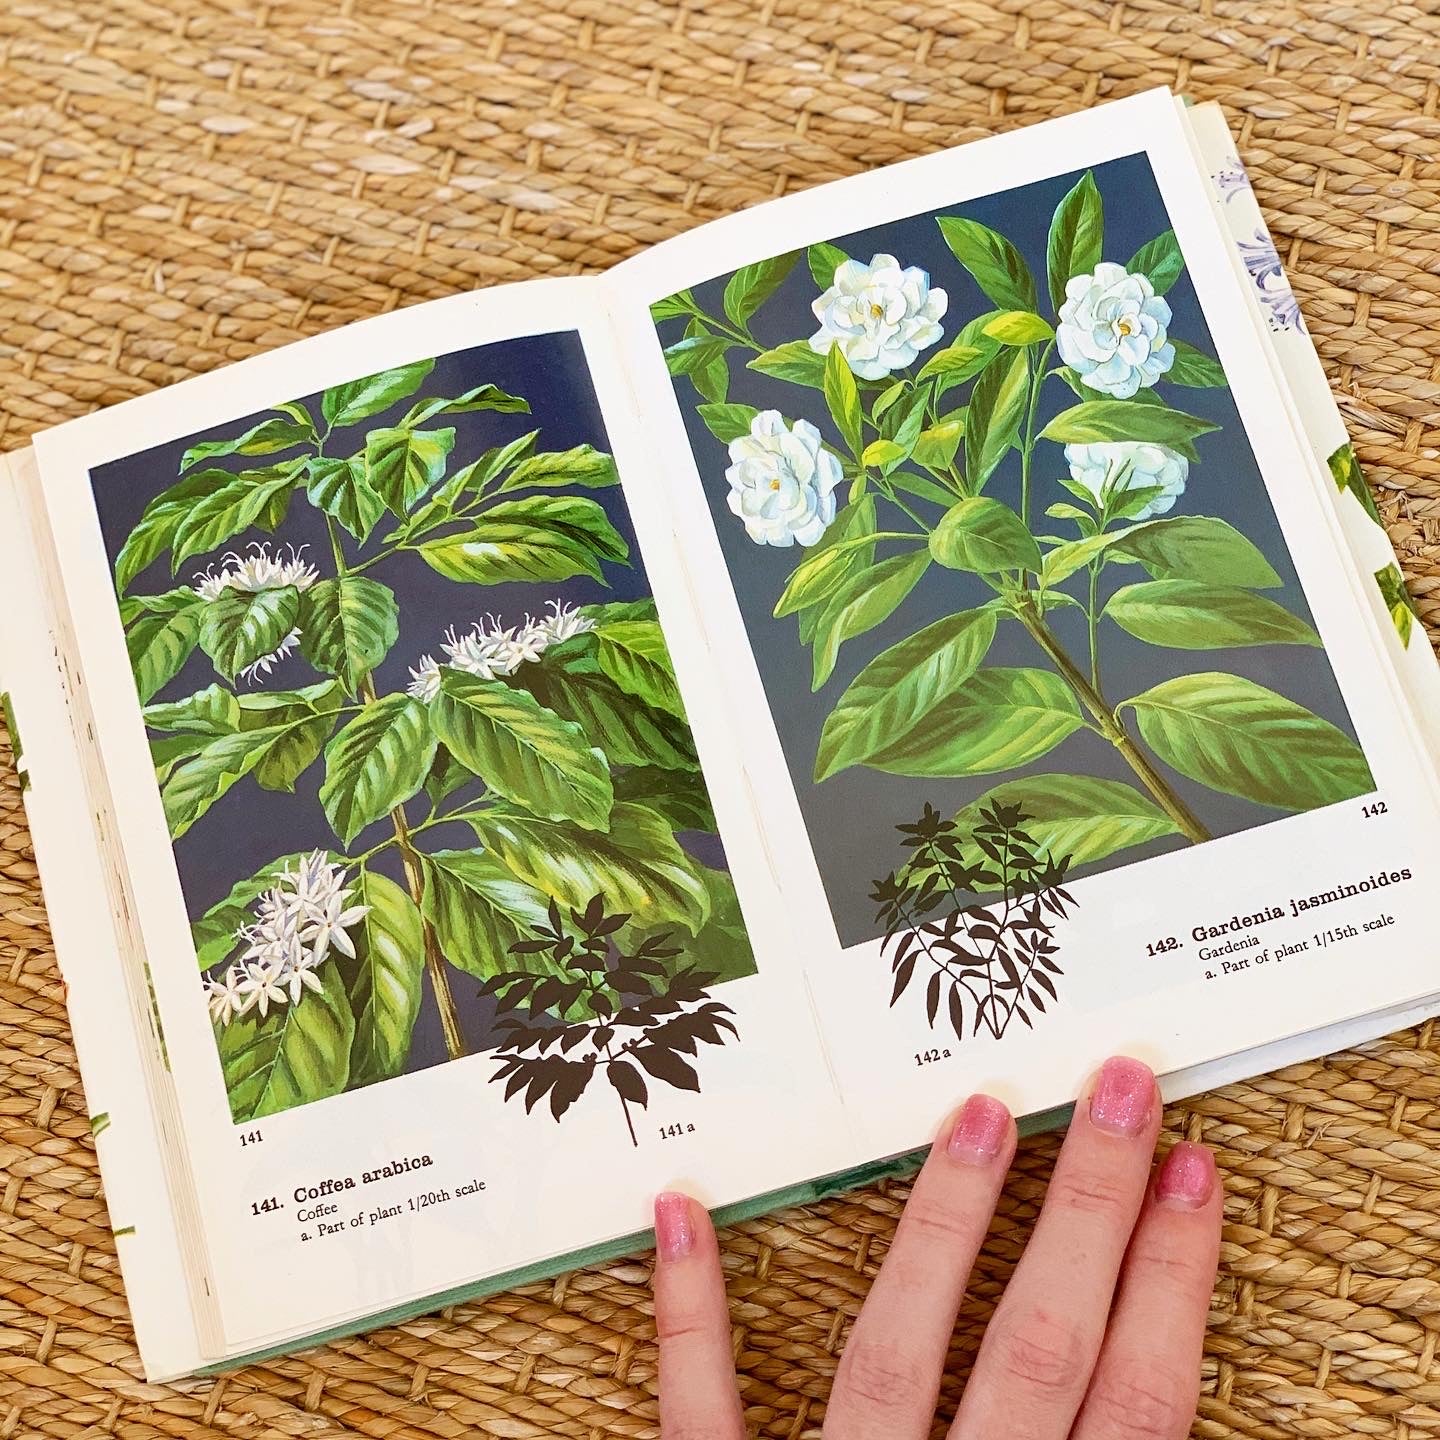 Pocket Encyclopedia of Indoor Plants (1975)